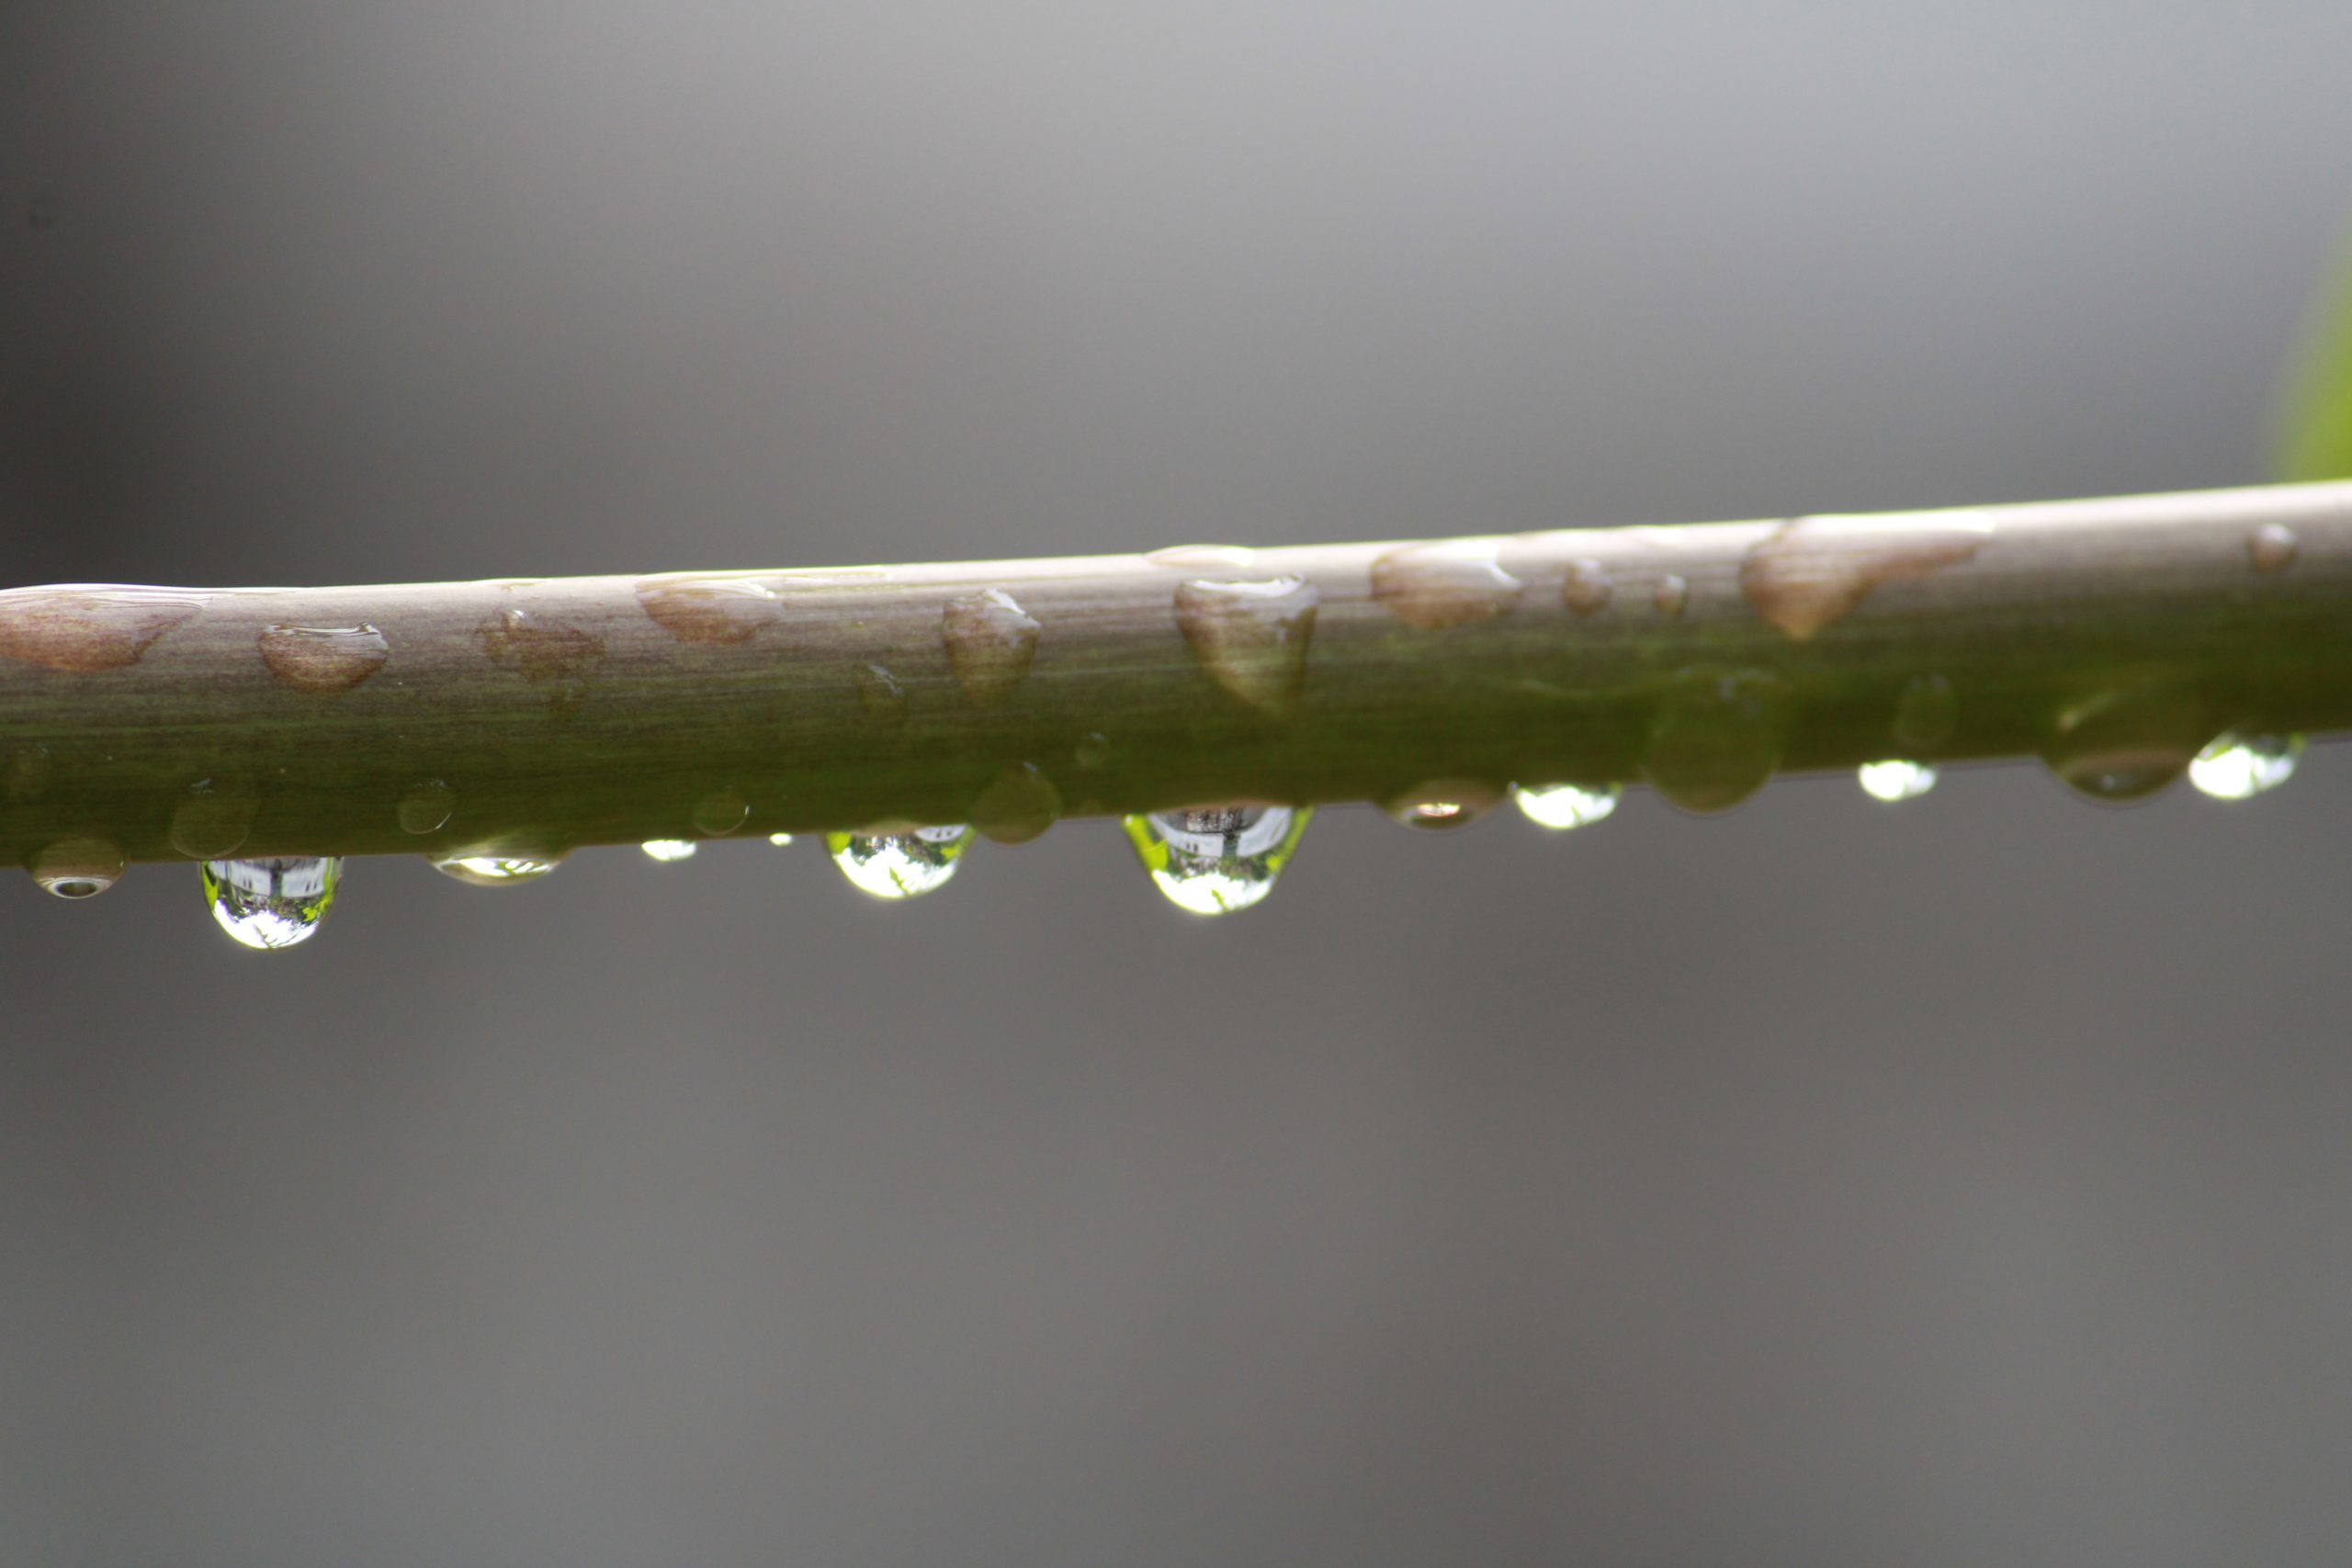 drops on a stem